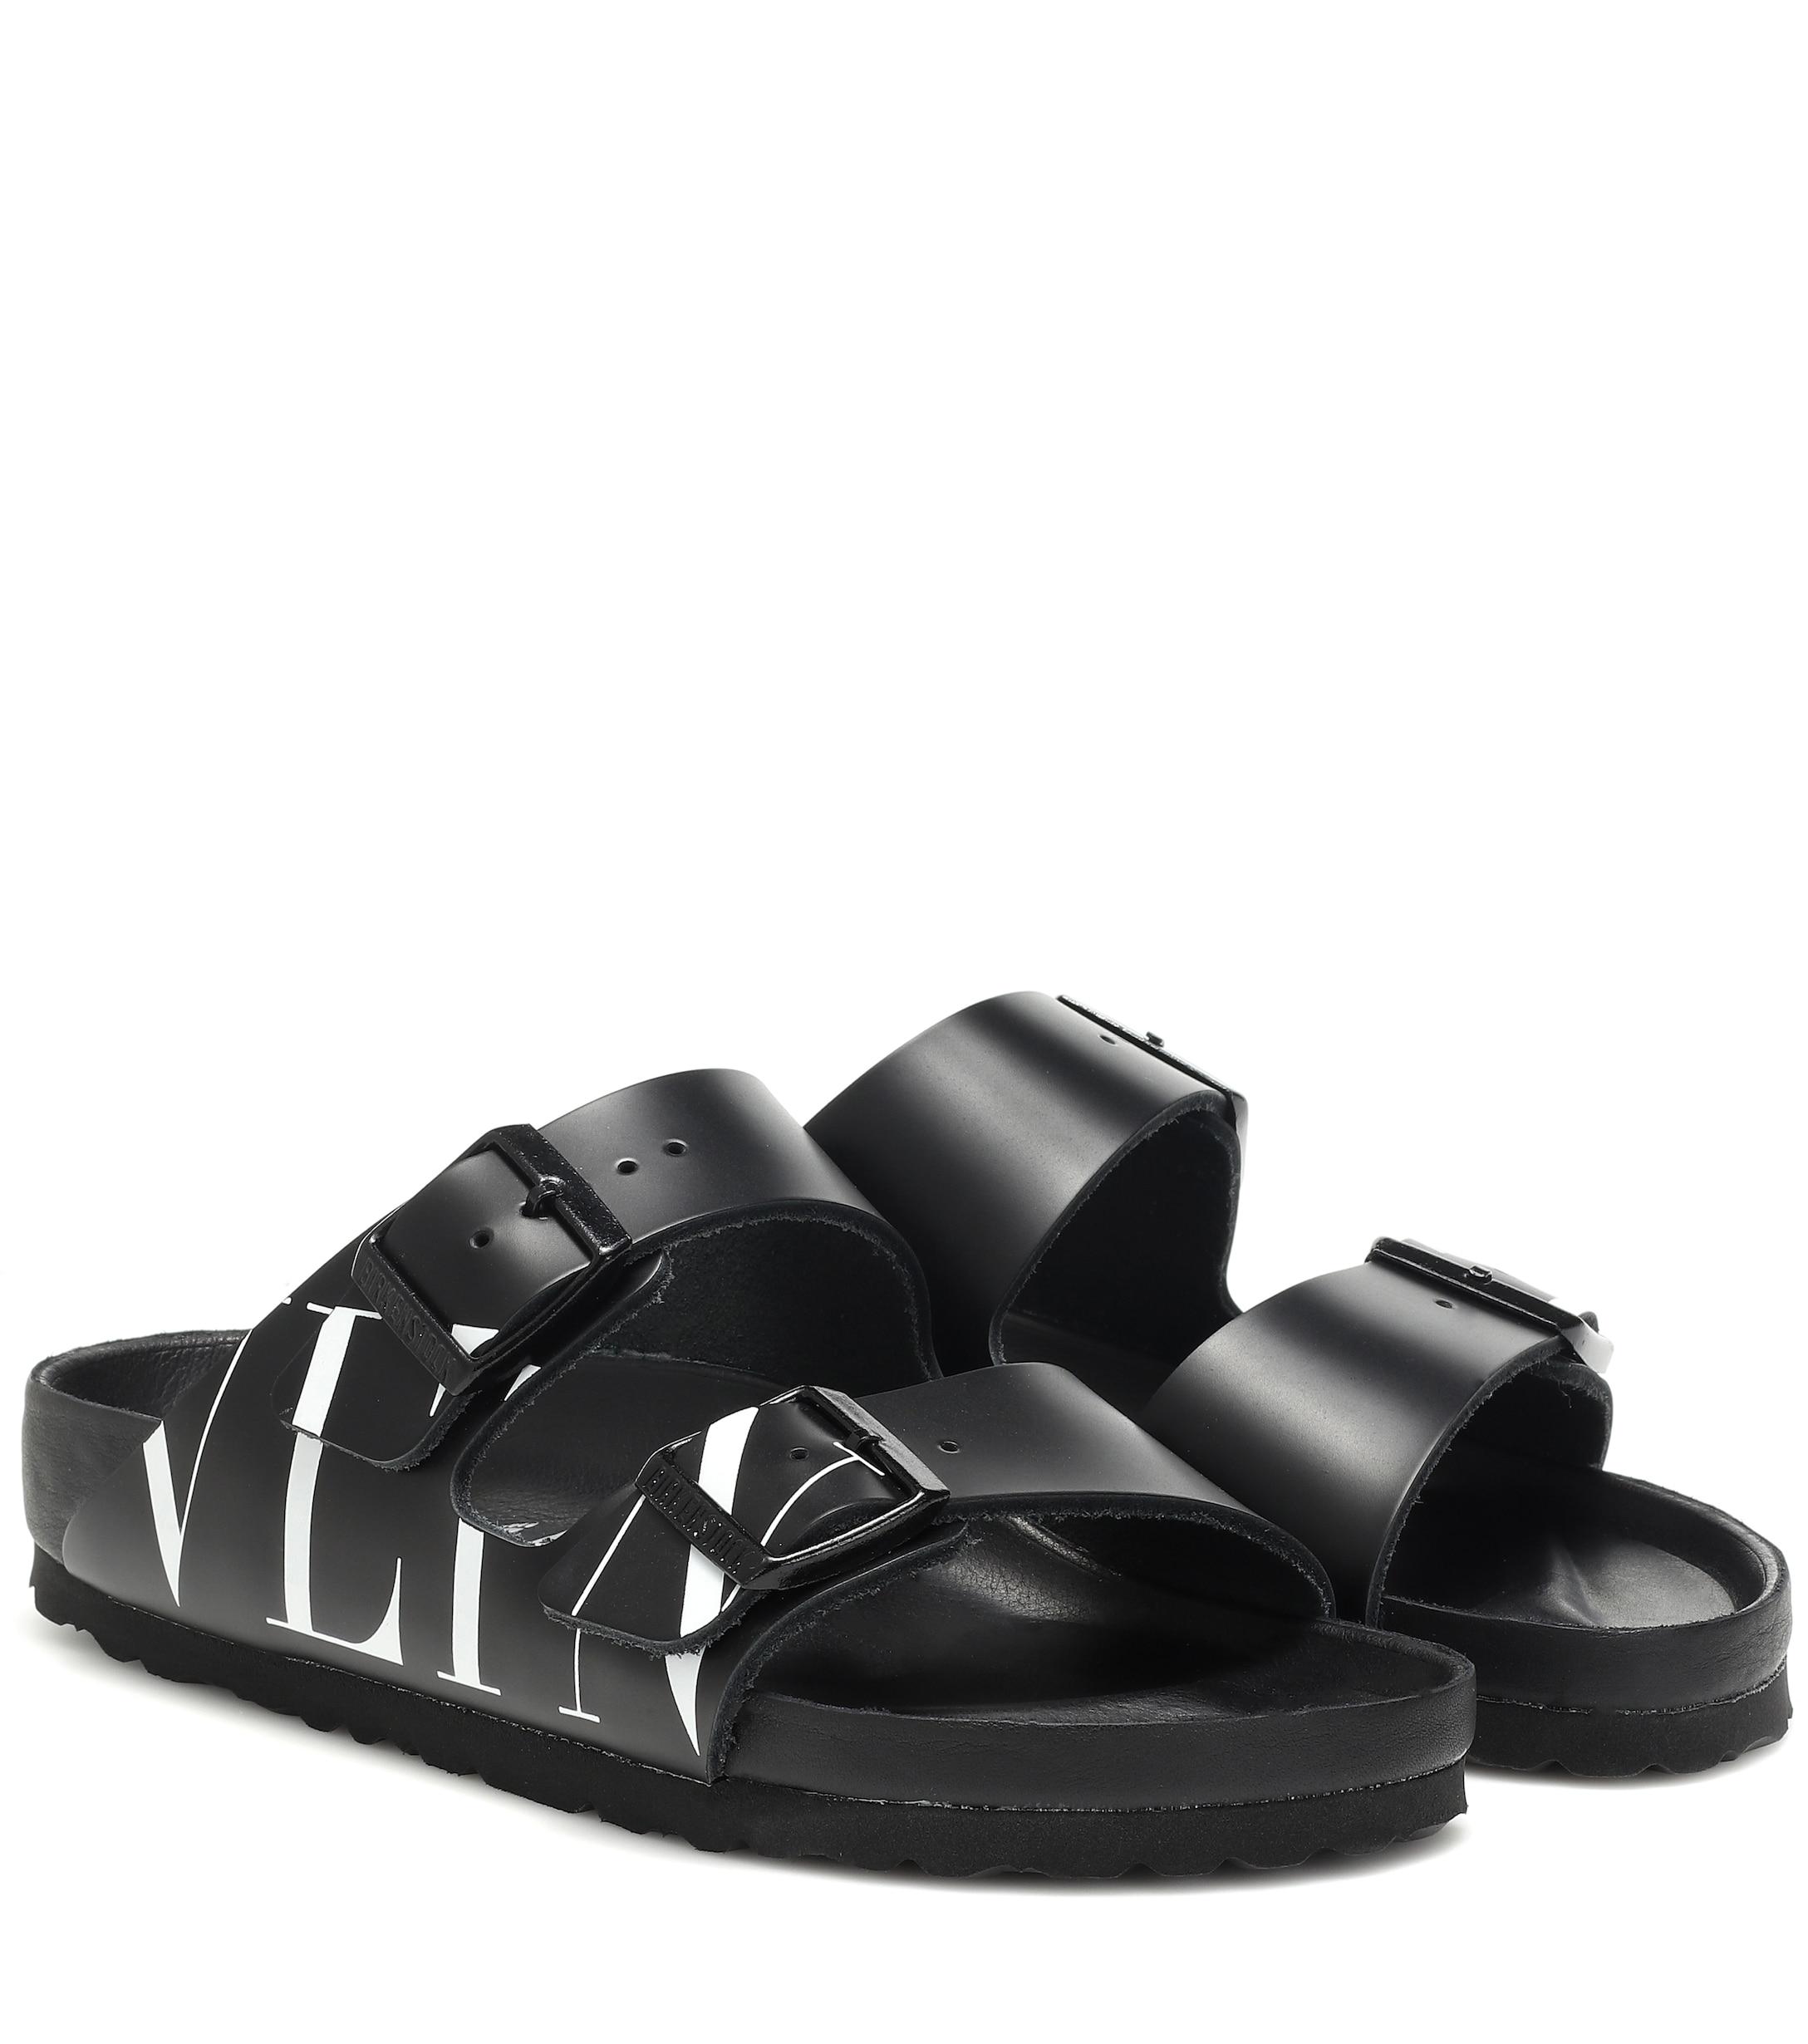 Valentino X Birkenstock Vltn Leather Sandals in Black - Lyst